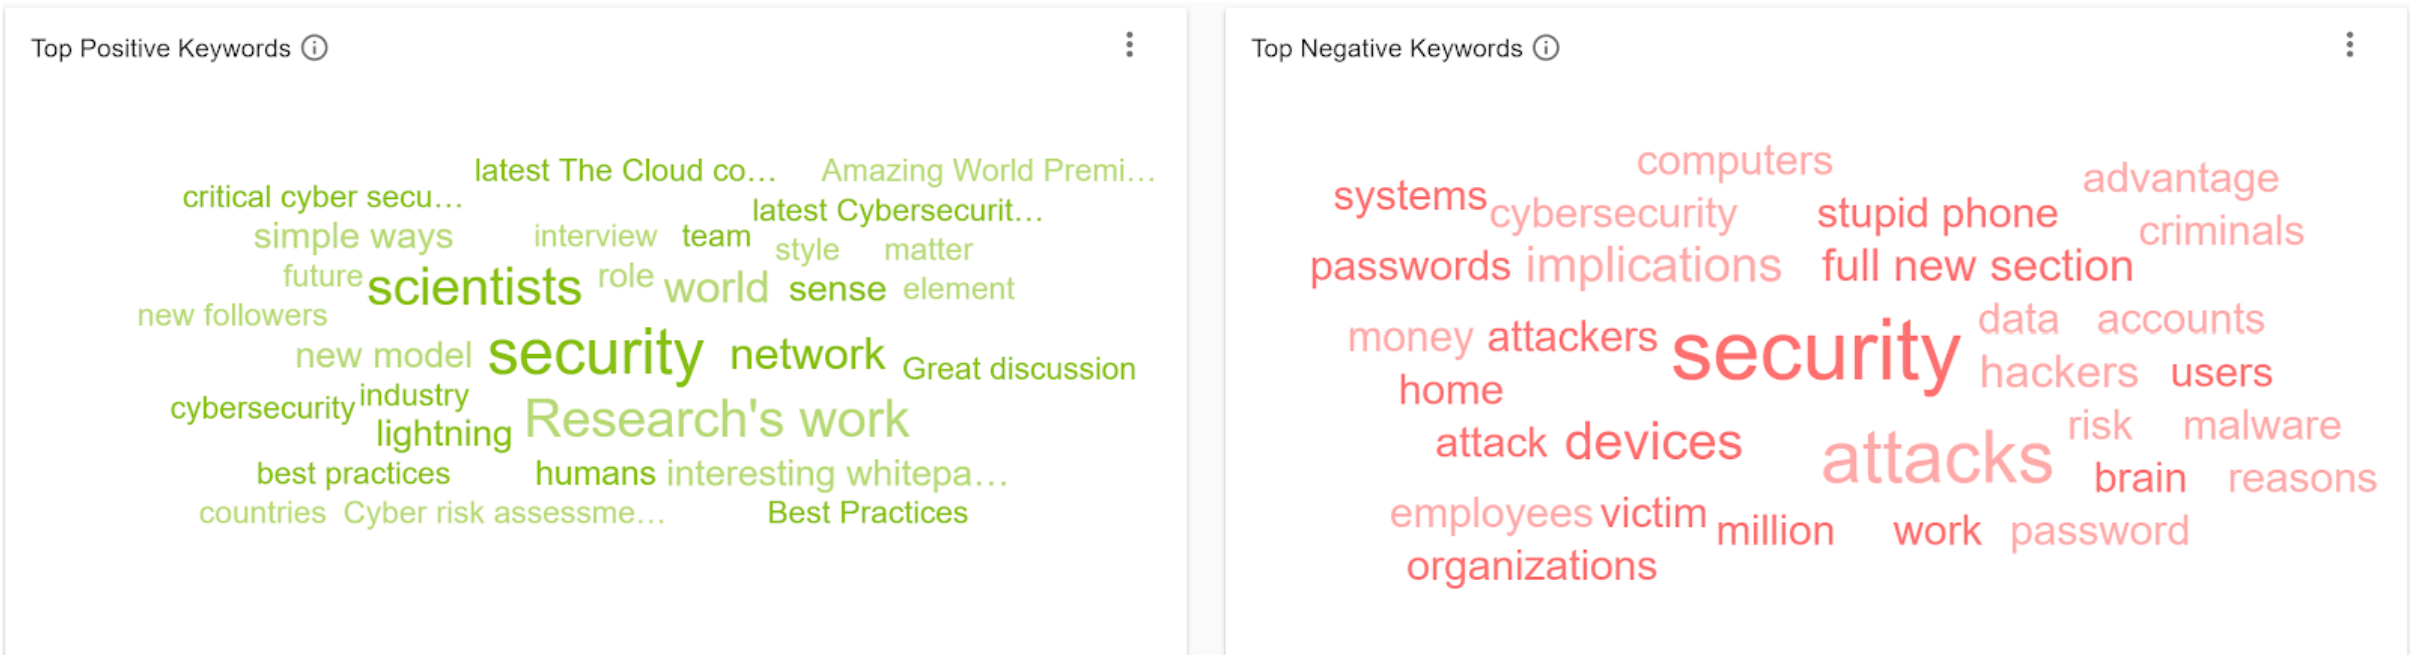 8 Positive Negative Social Listening IOT - Cybersecurity Keywords